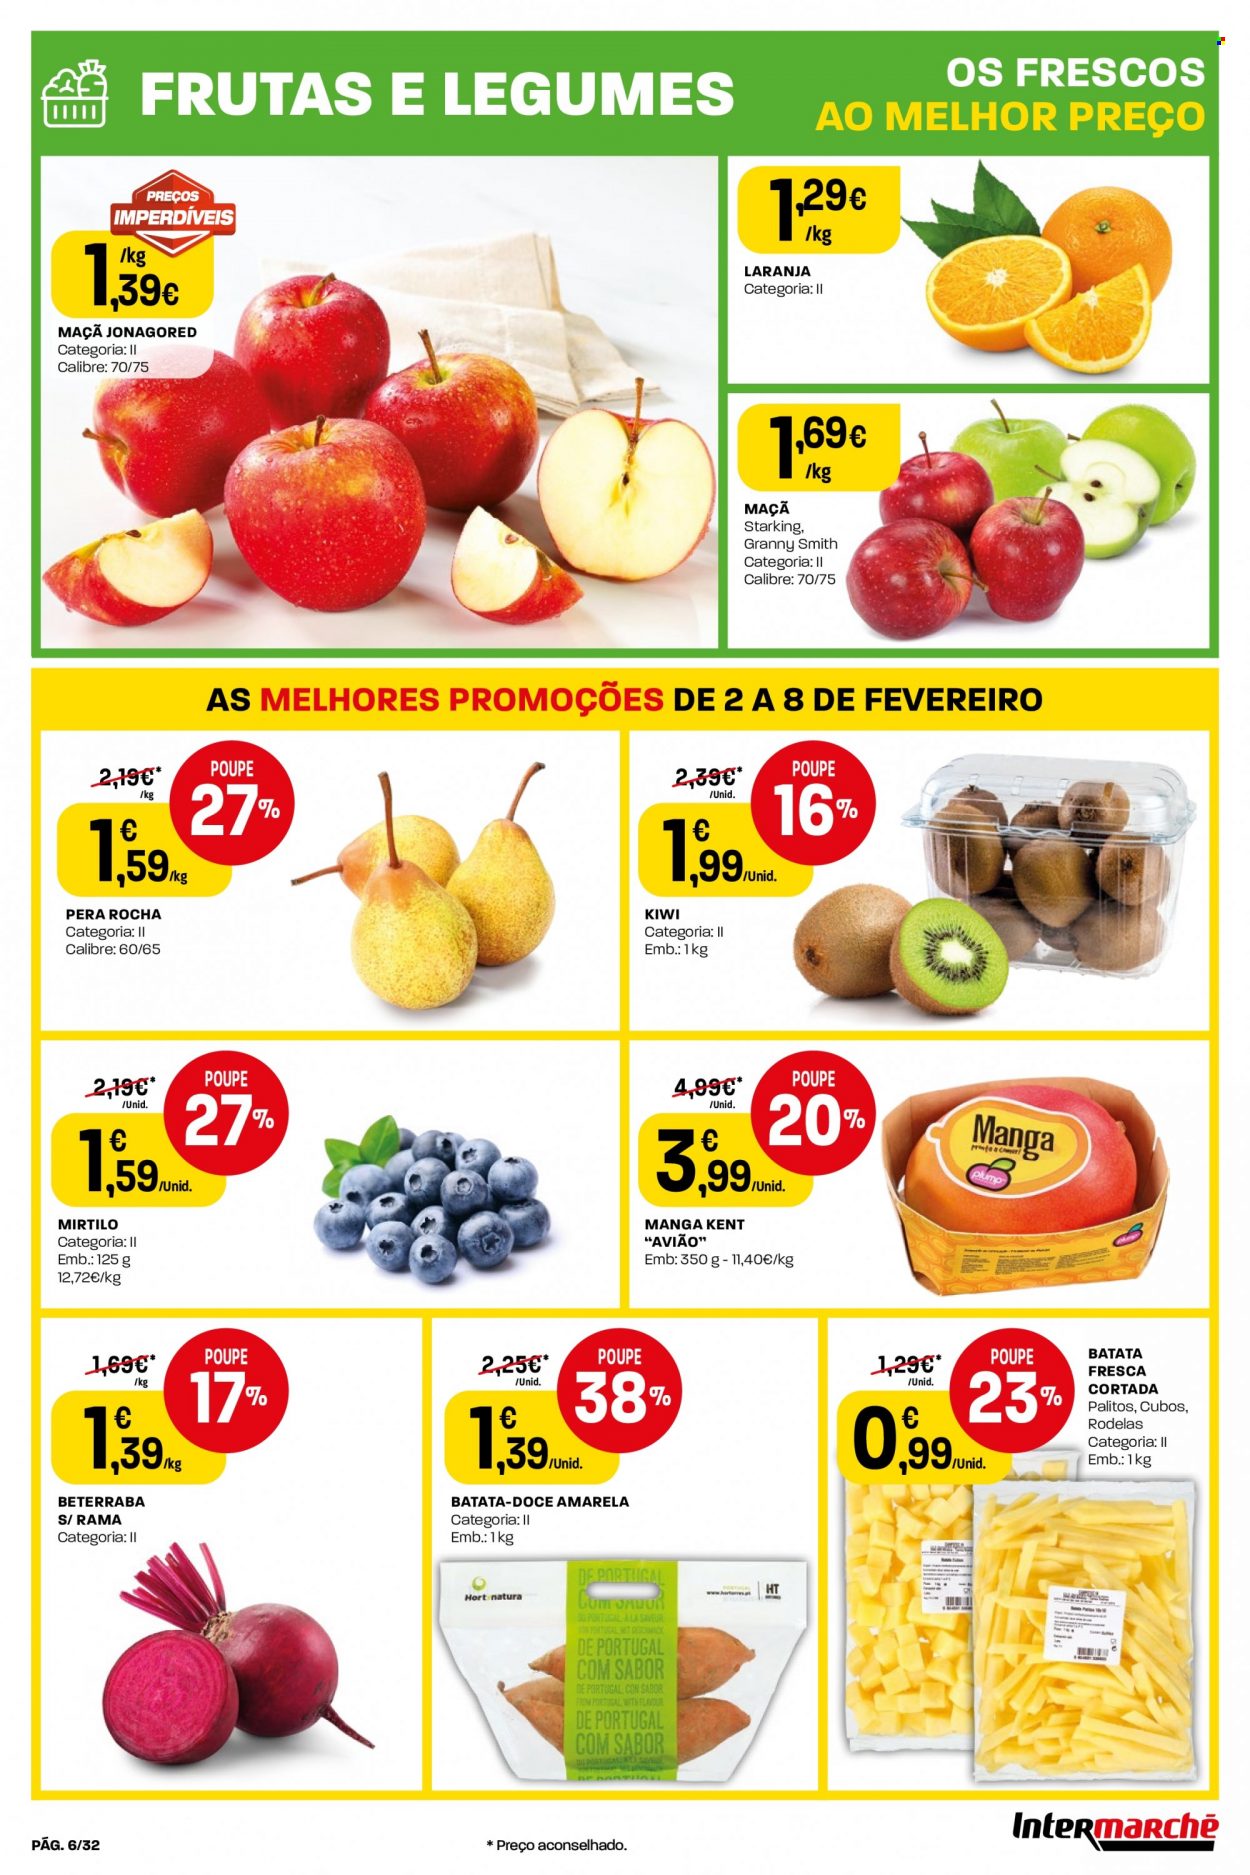 thumbnail - Folheto Intermarché - 2.2.2023 - 8.2.2023 - Produtos em promoção - maçã, pera, kiwi, laranja, mirtilo, manga, batata-doce, batata, beterraba. Página 6.